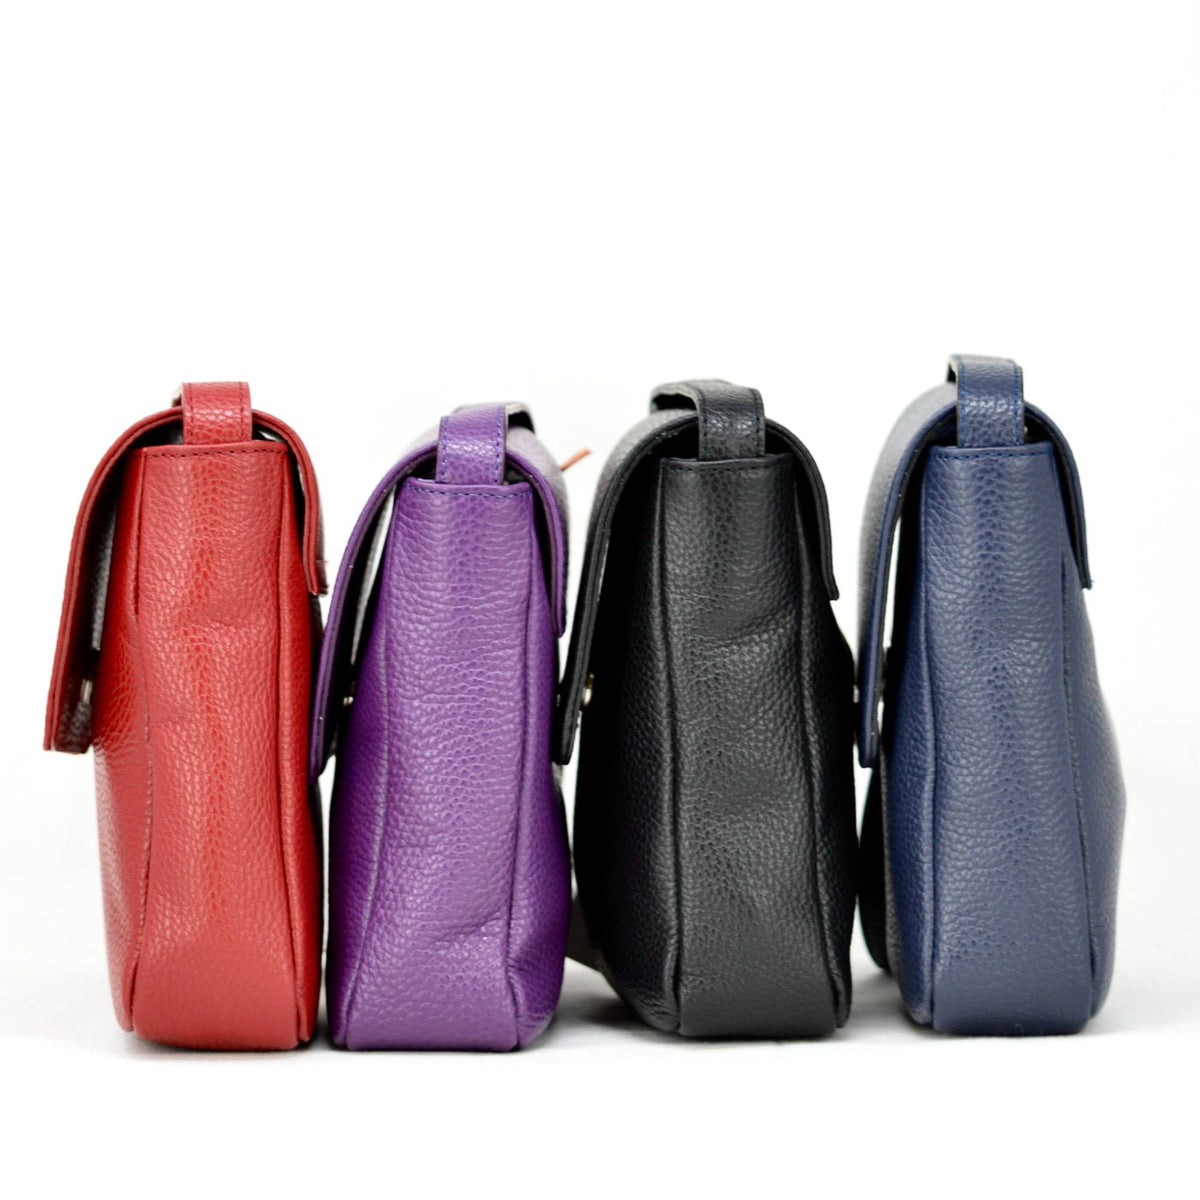 Annamaria Crossbody Bag, Italian Leather, Made in Italy - MyItalianDecor